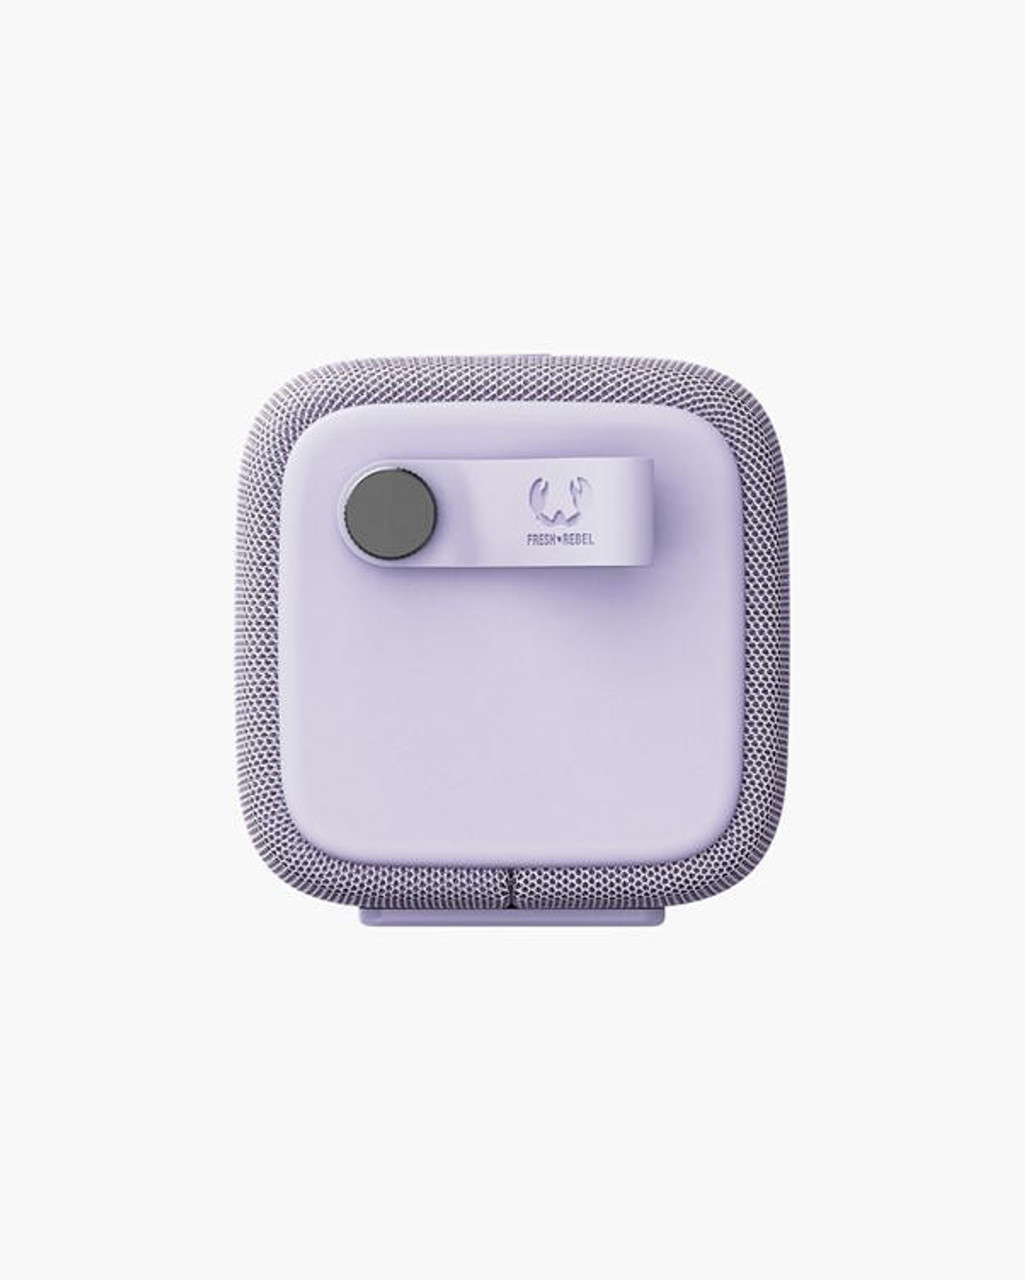 Fresh N\' Rebel Rockbox Bold S Waterproof Bluetooth speaker Dreamy Lilac |  1RB6000DL